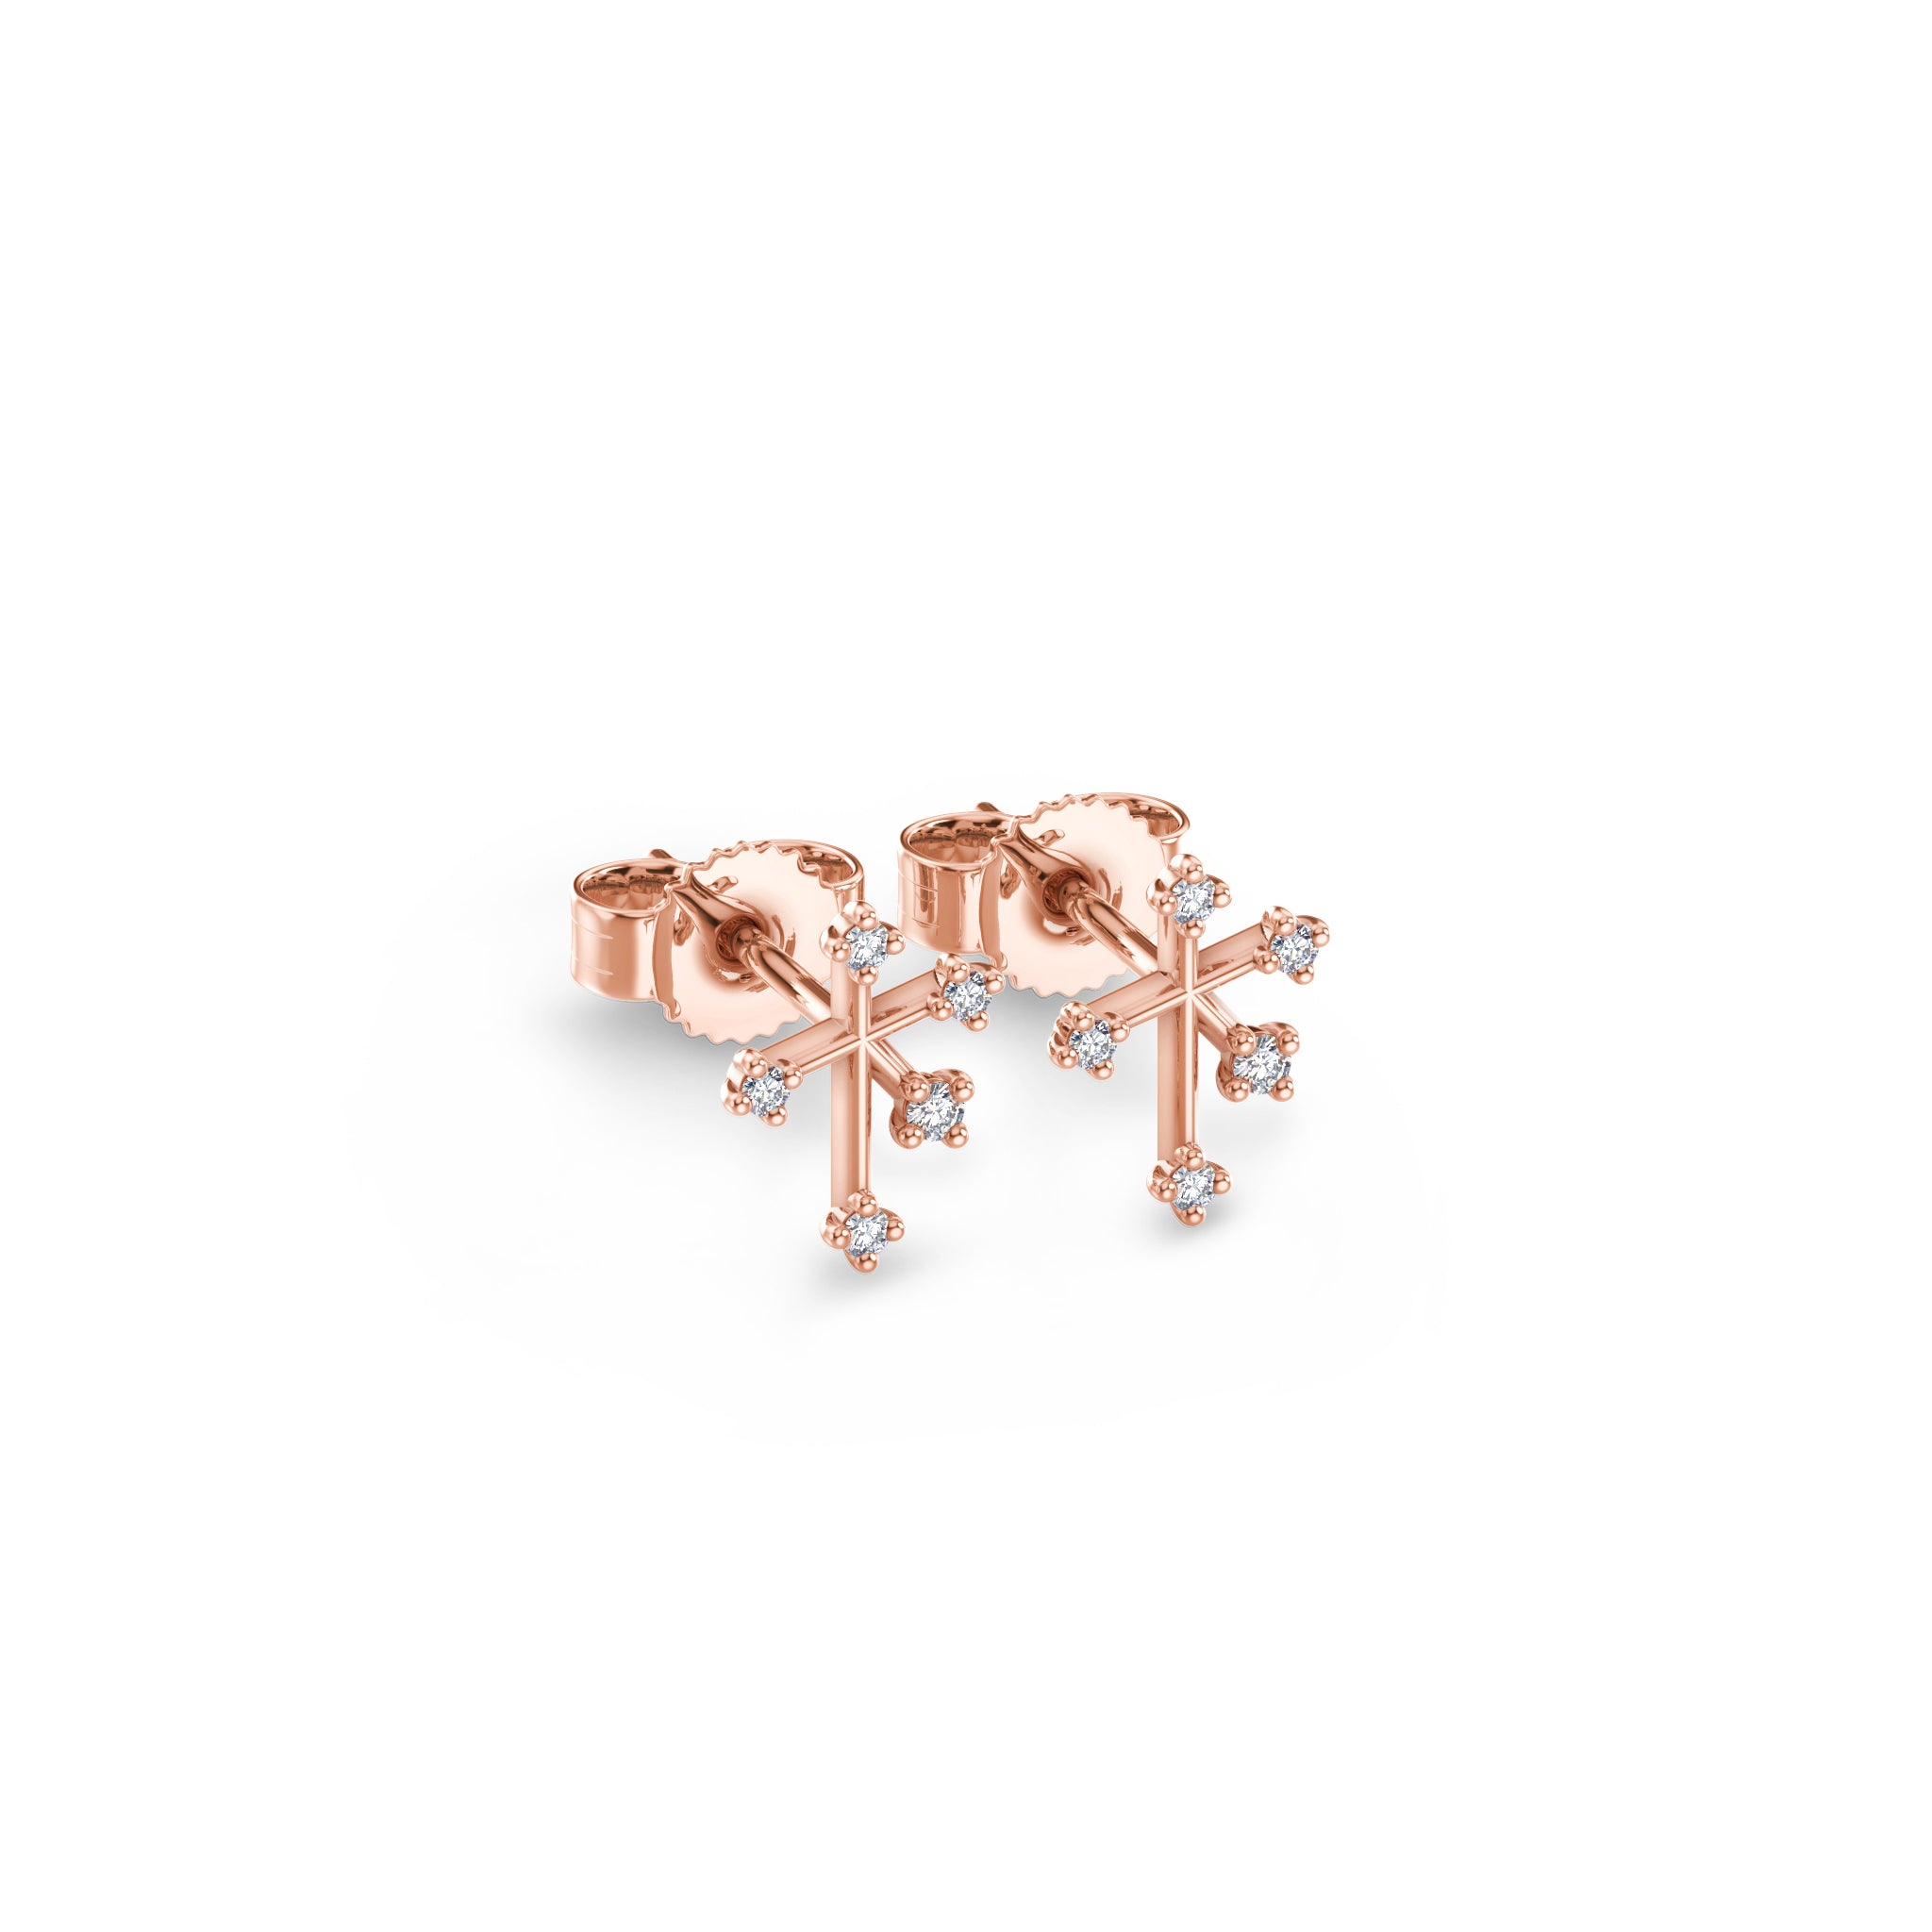 Southern Cross Diamond Stud Earrings | 14K Rose Gold - SHIMANSKY.CO.ZA